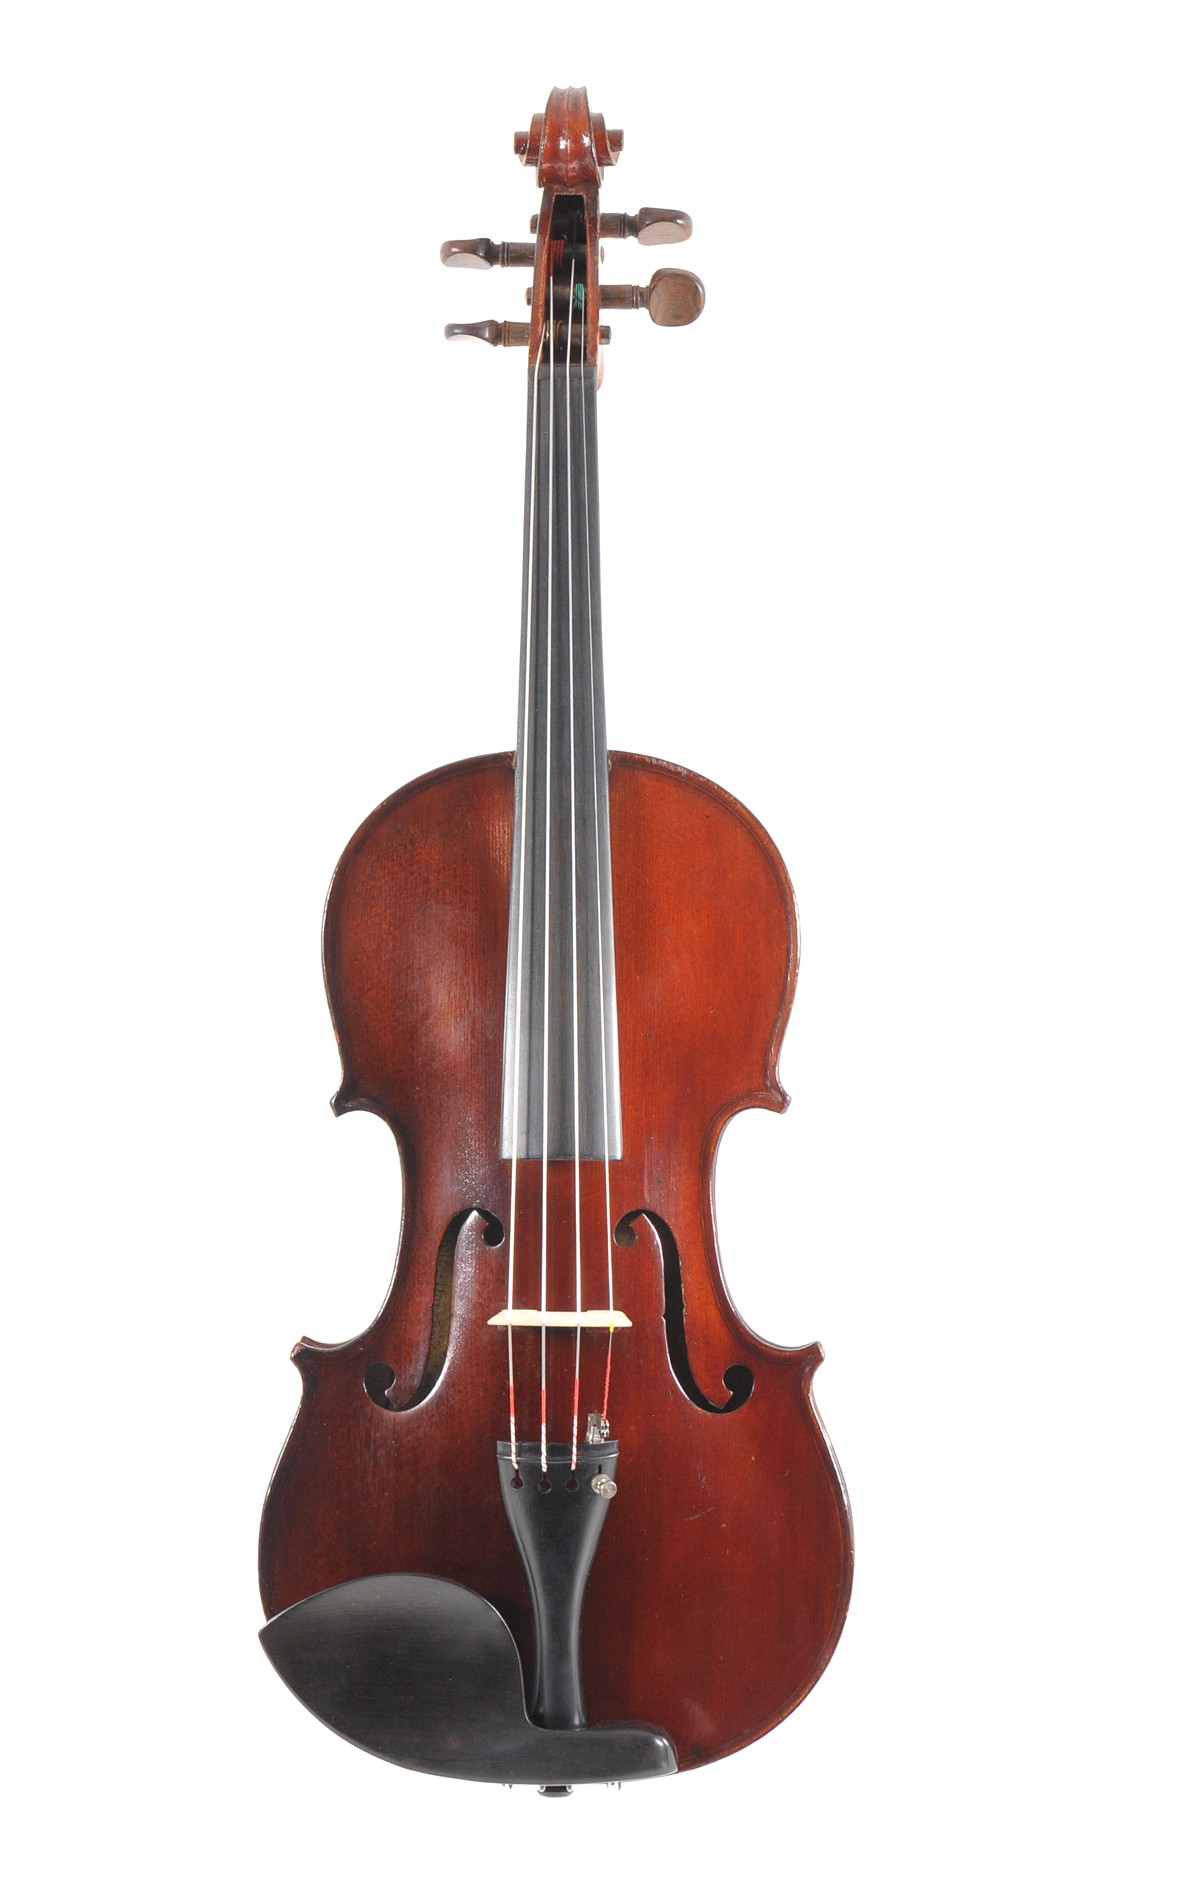 J.T.L. Adolf Durenzy violin